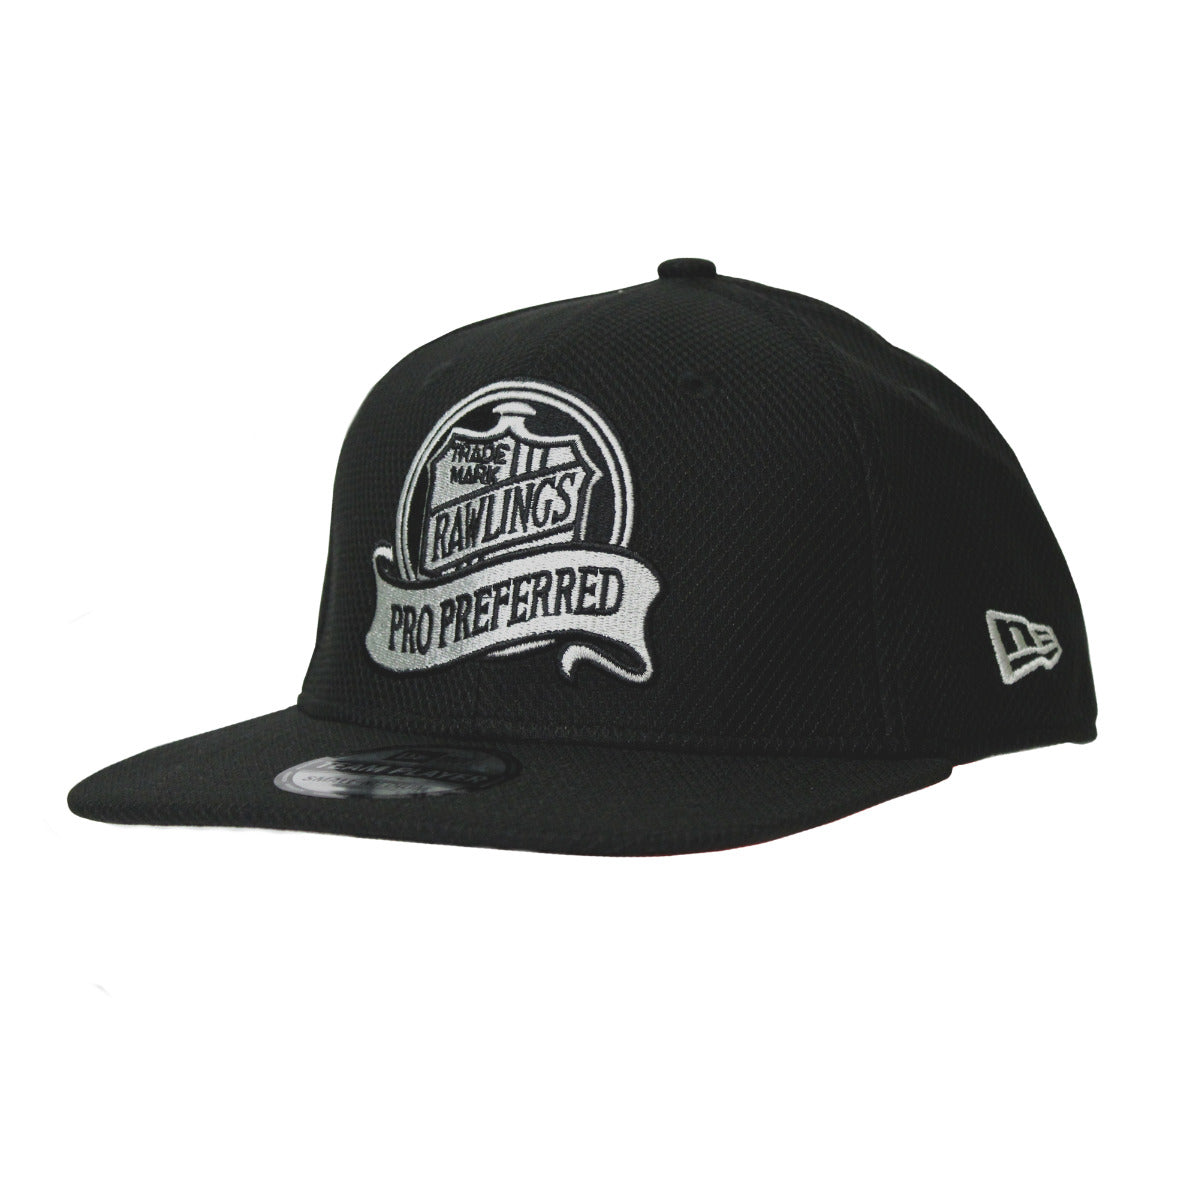 New Era Rawlings Pro Preferred TP Hat